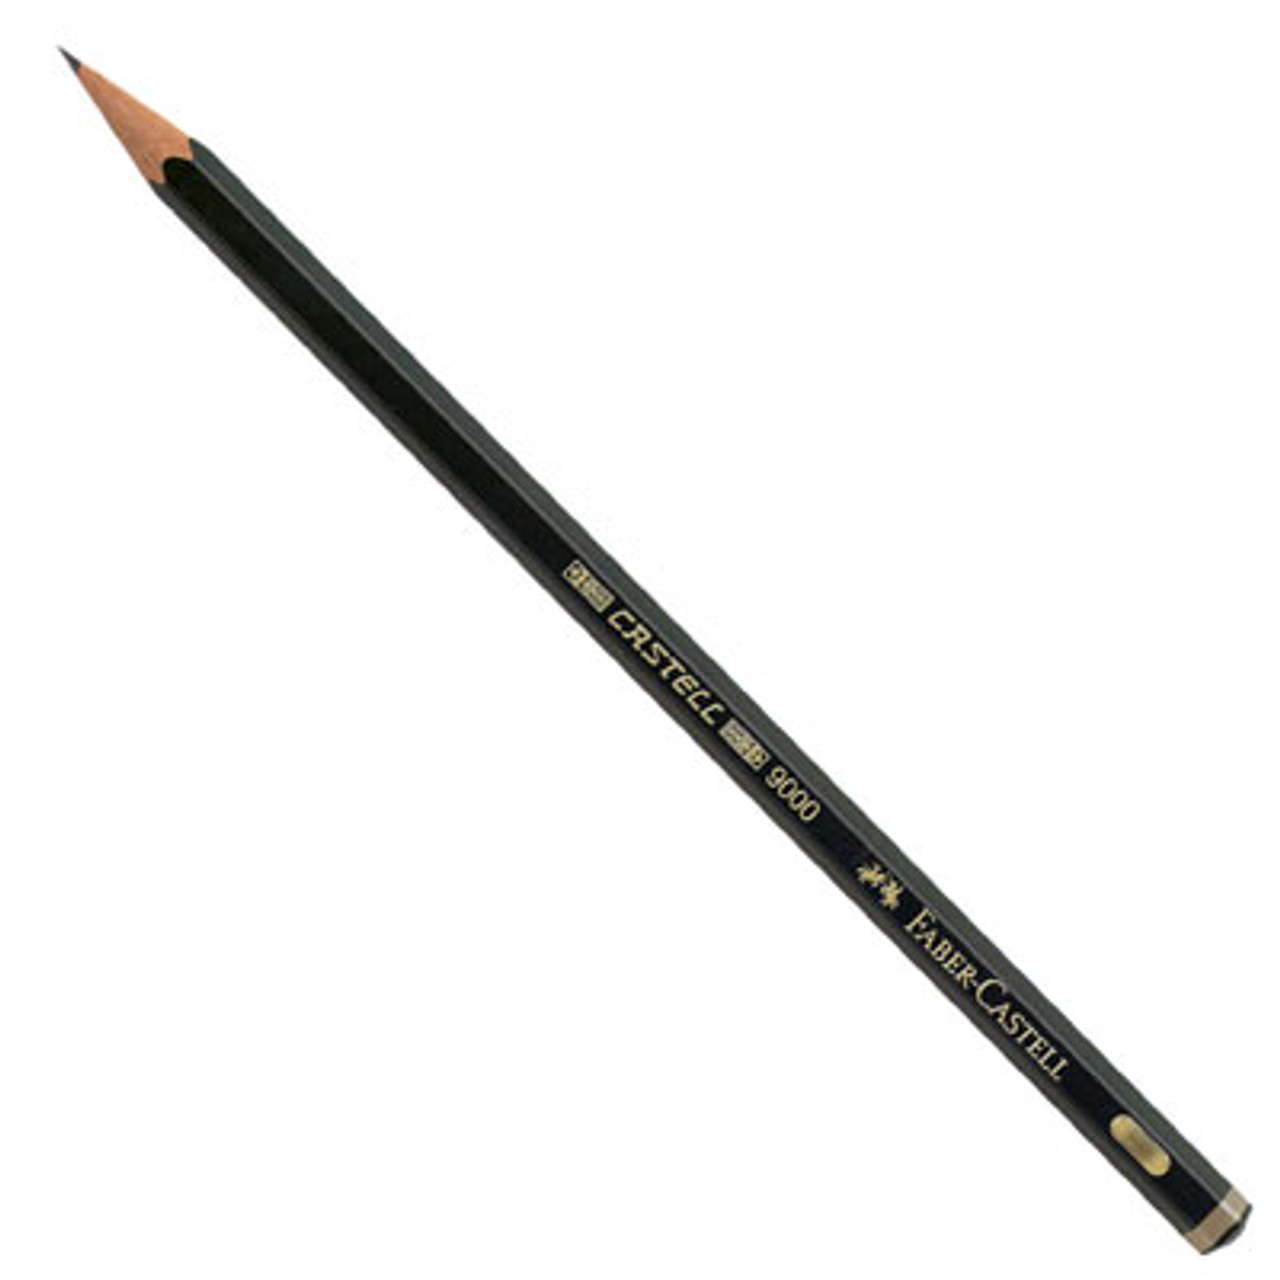 Faber Castell Pencils, Castell 9000 Art graphite pencils, 2B